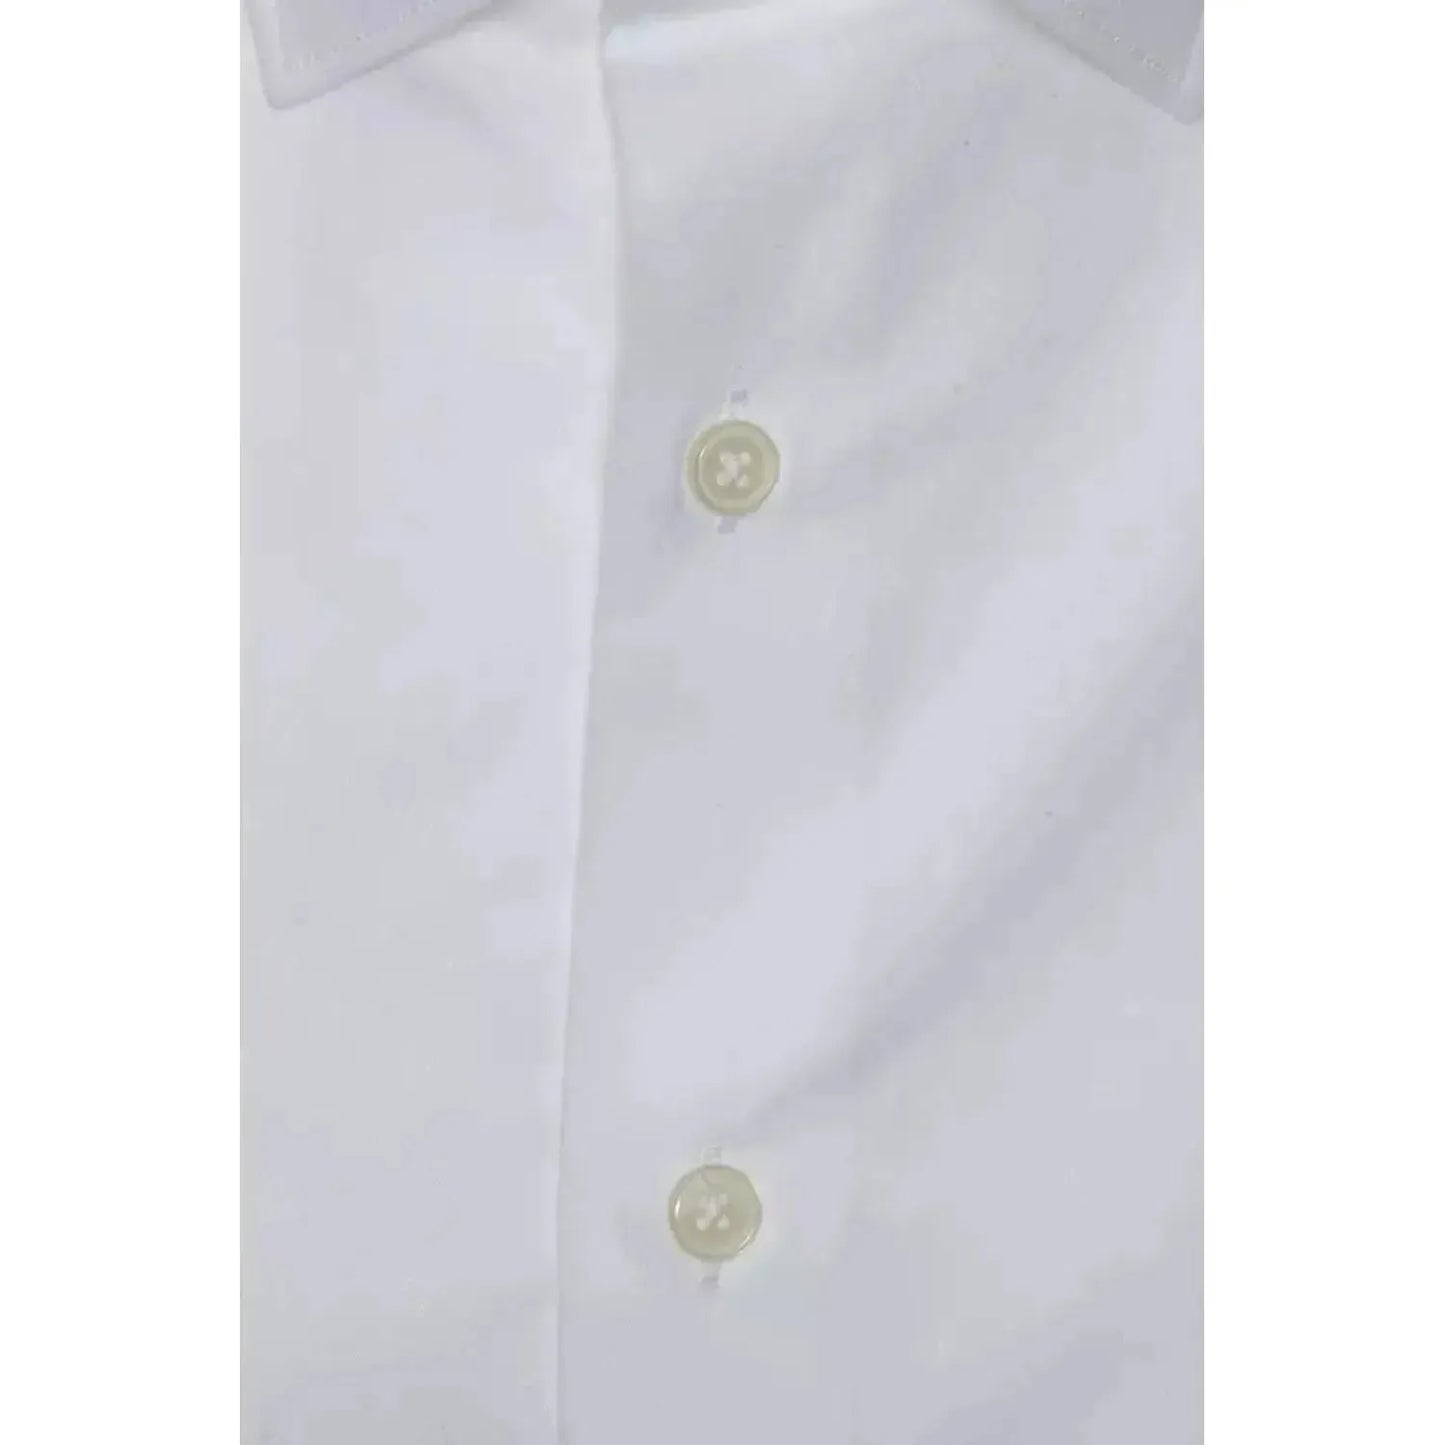 Robert Friedman Elegant White Cotton Slim Shirt for Men white-cotton-shirt-26